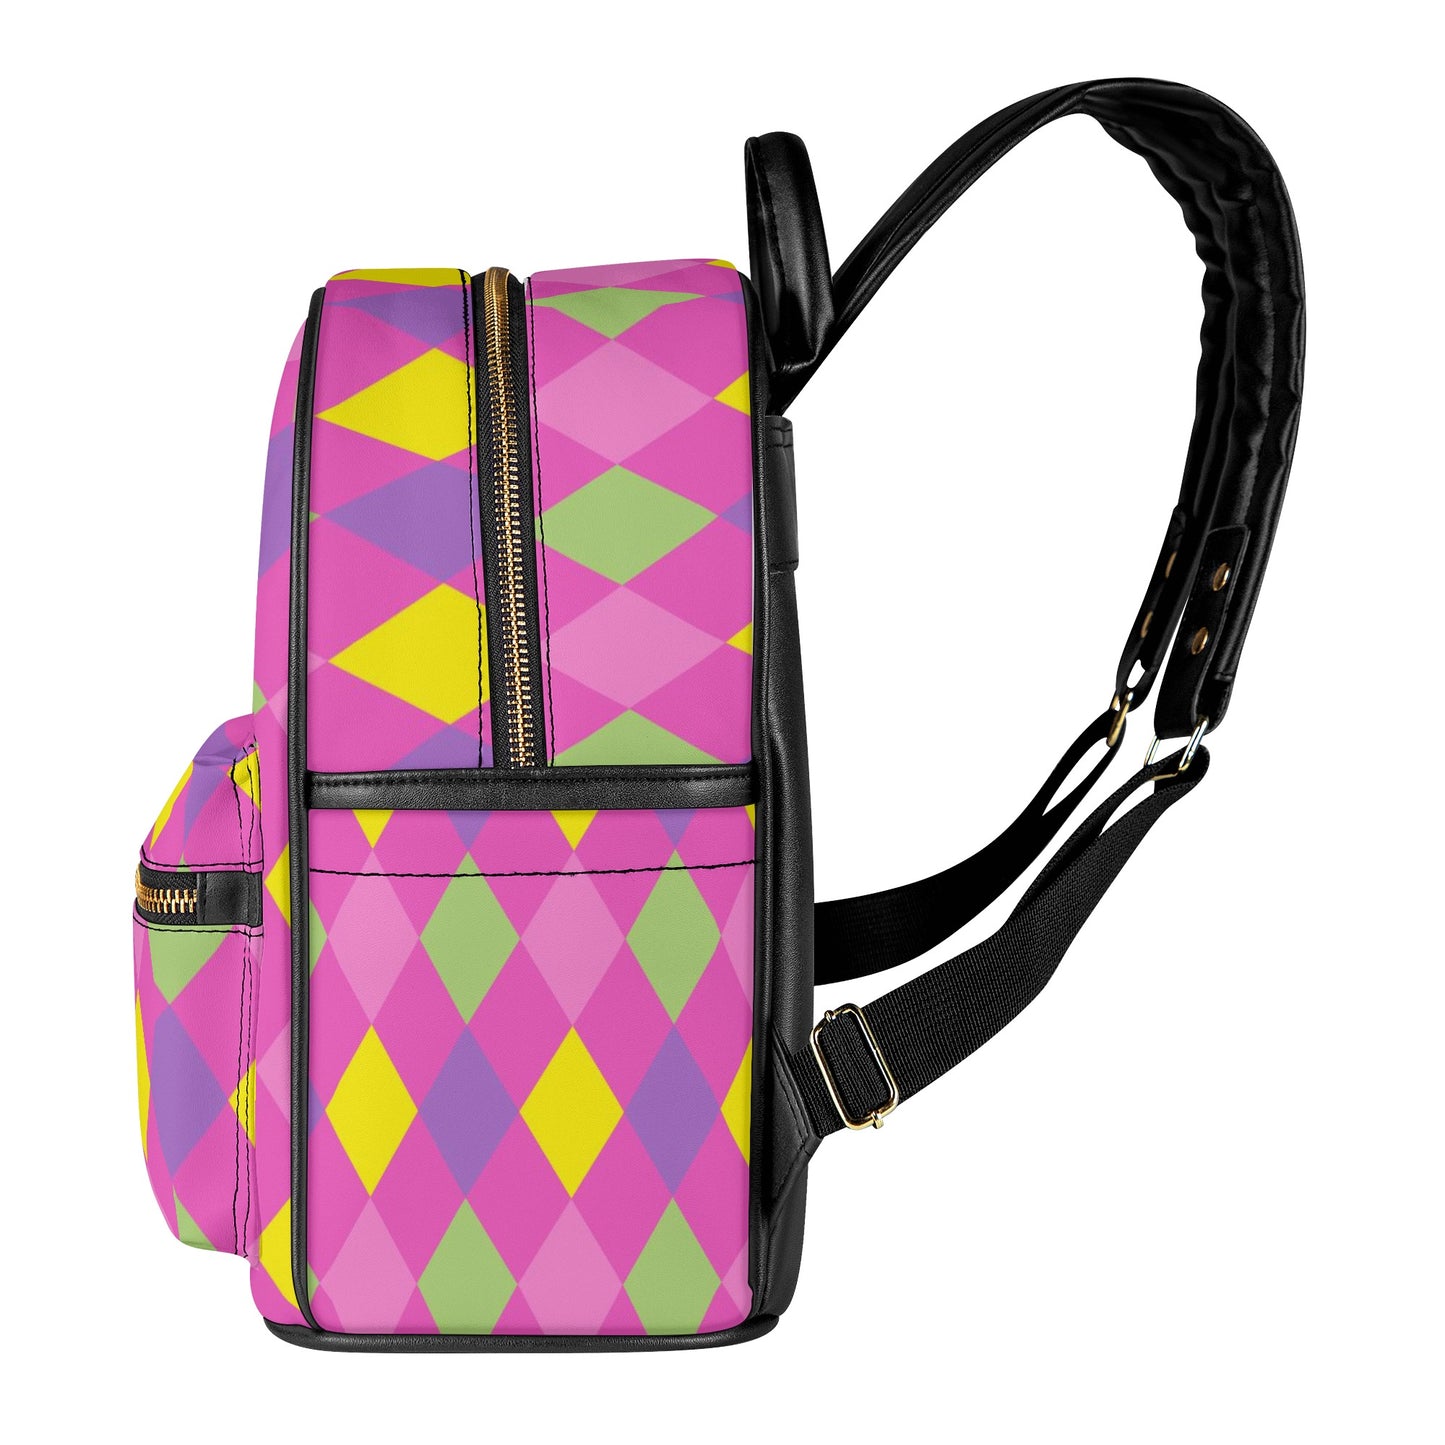 Pastel Circus PU Backpack